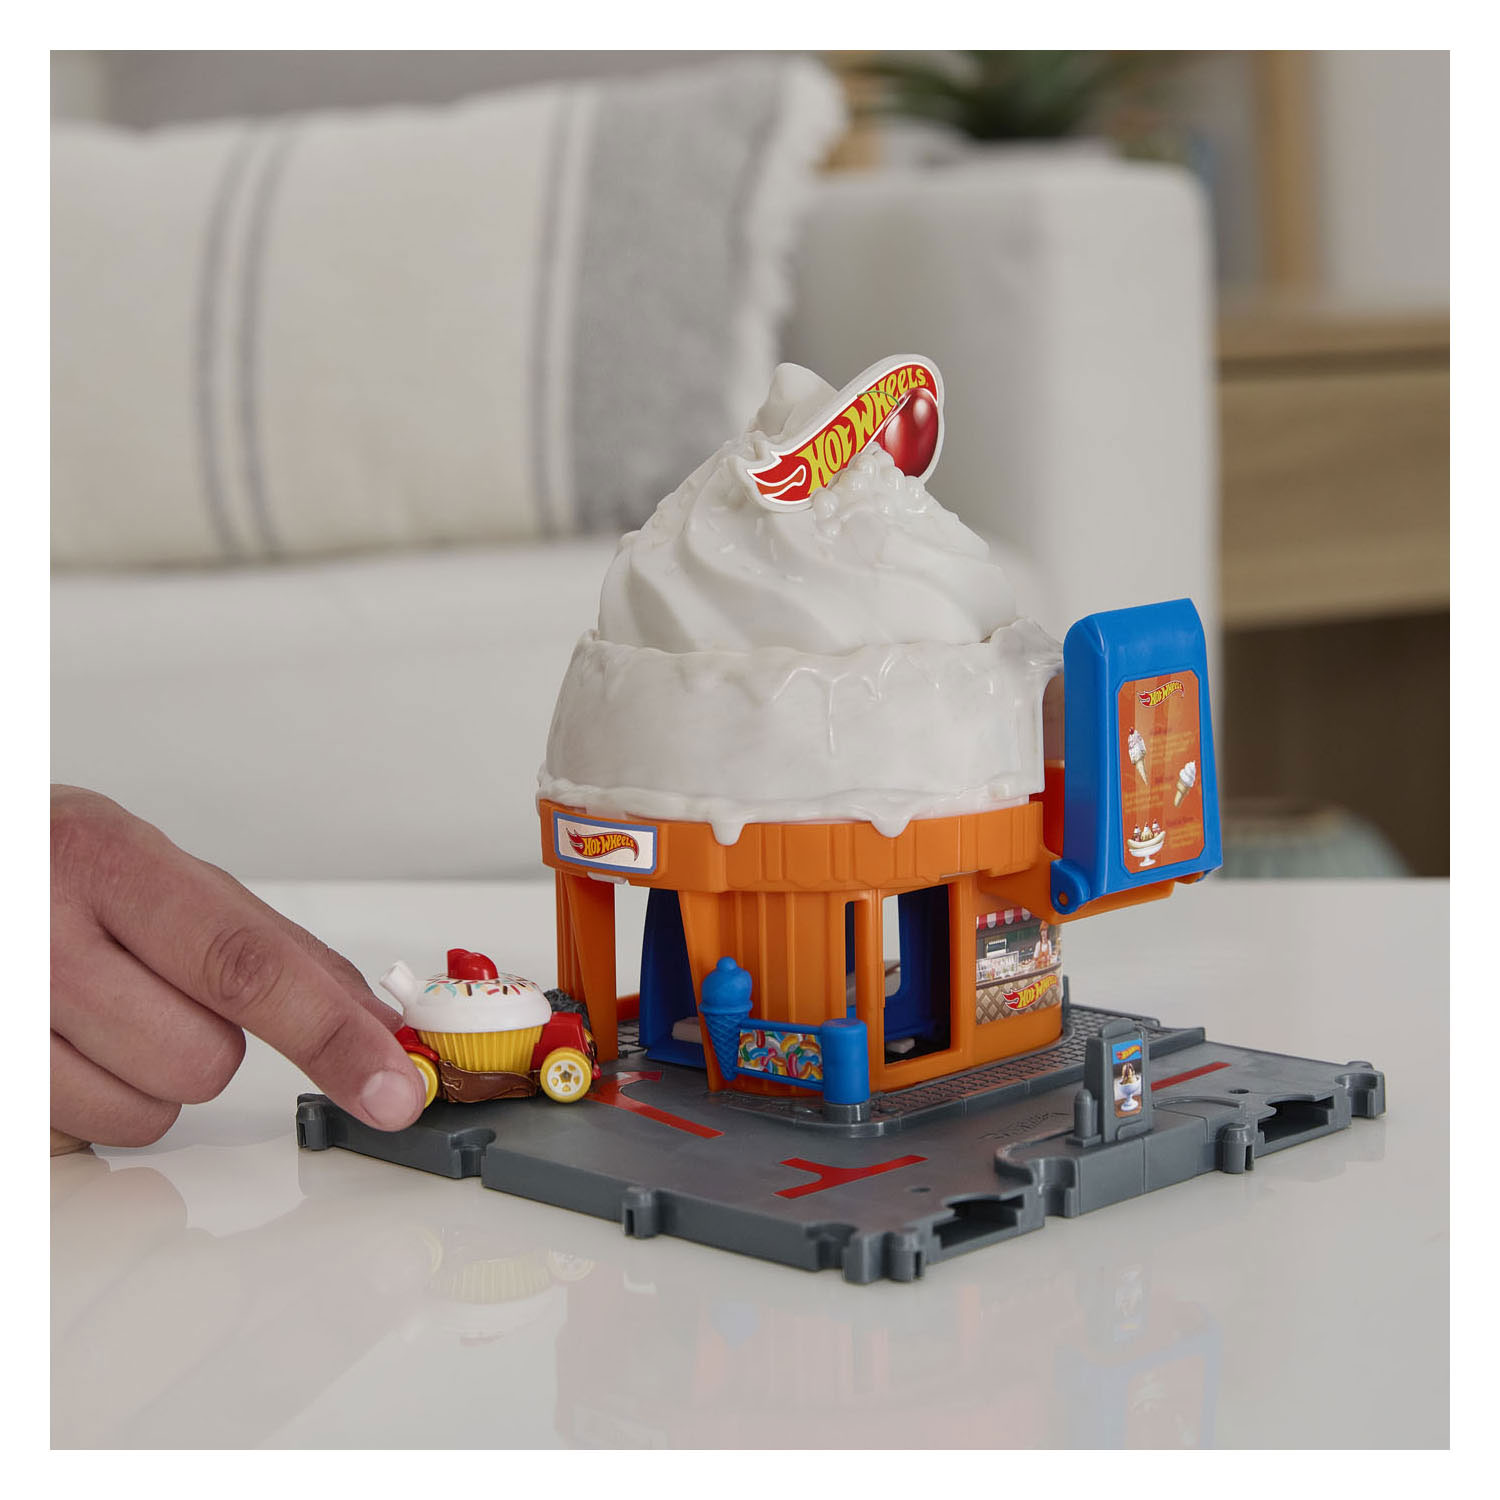 Hot Wheels City Downtown Ice Cream Swirl 164 Track Set Mattel Toys - ToyWiz